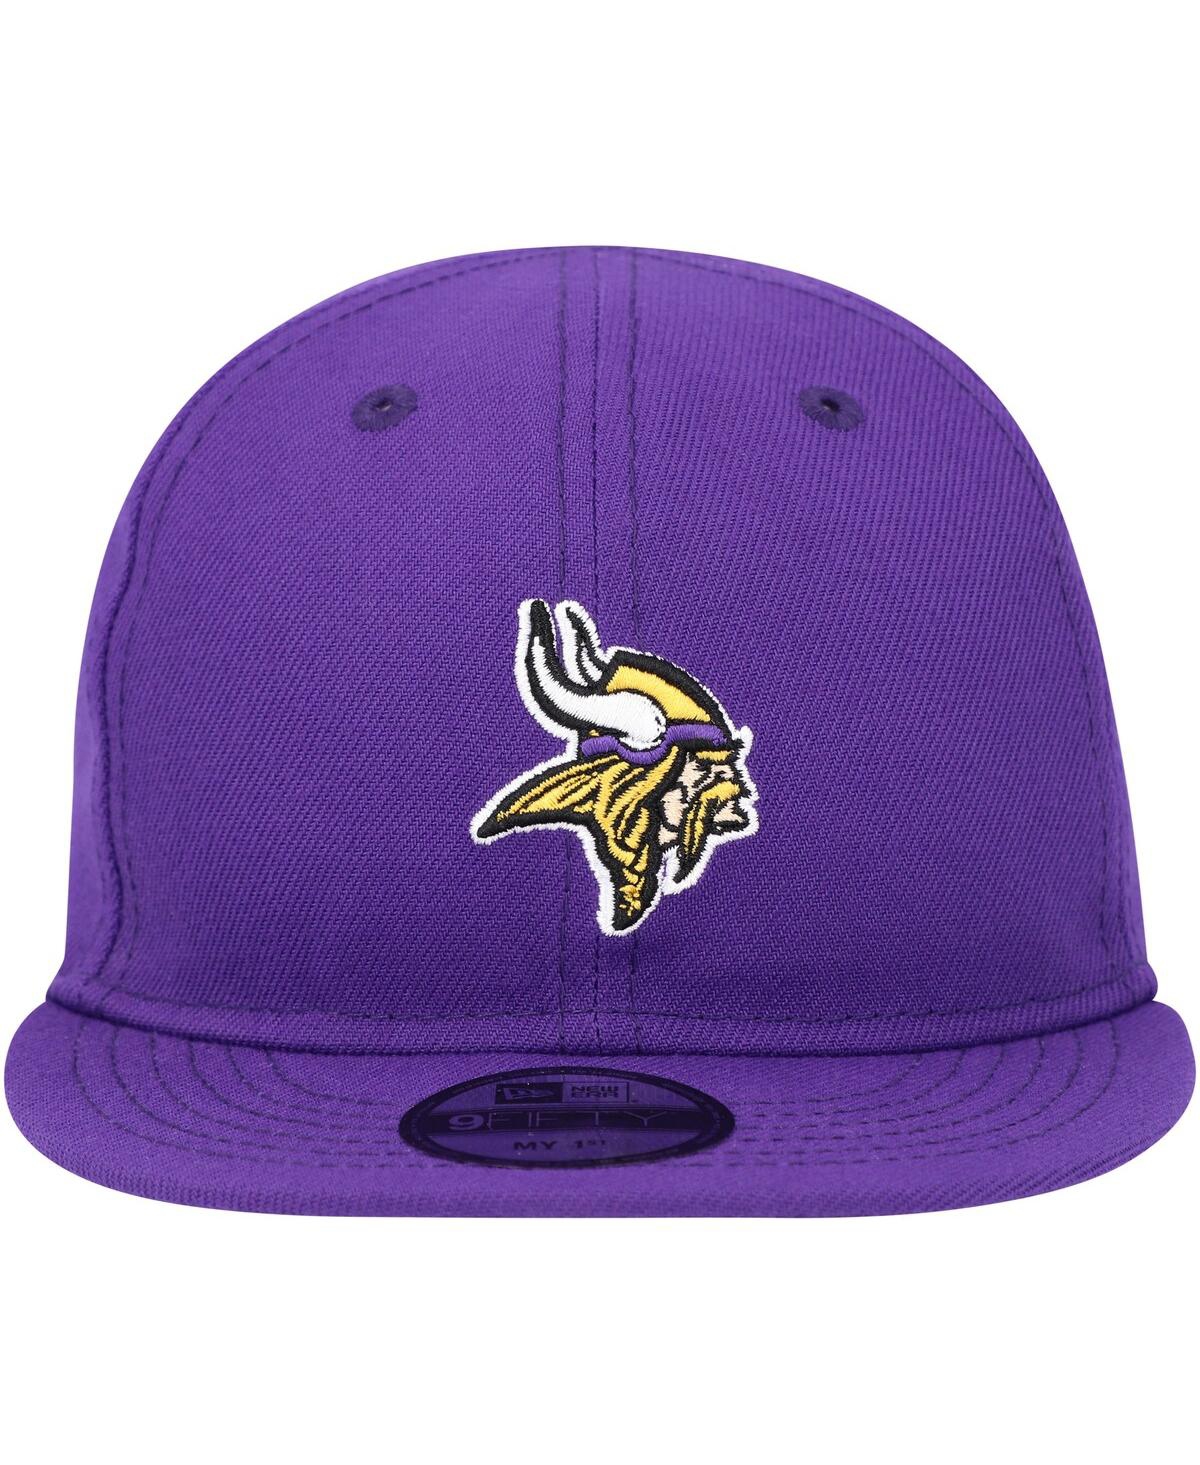 Shop New Era Infant Boys And Girls  Purple Minnesota Vikings My 1st 9fifty Snapback Hat